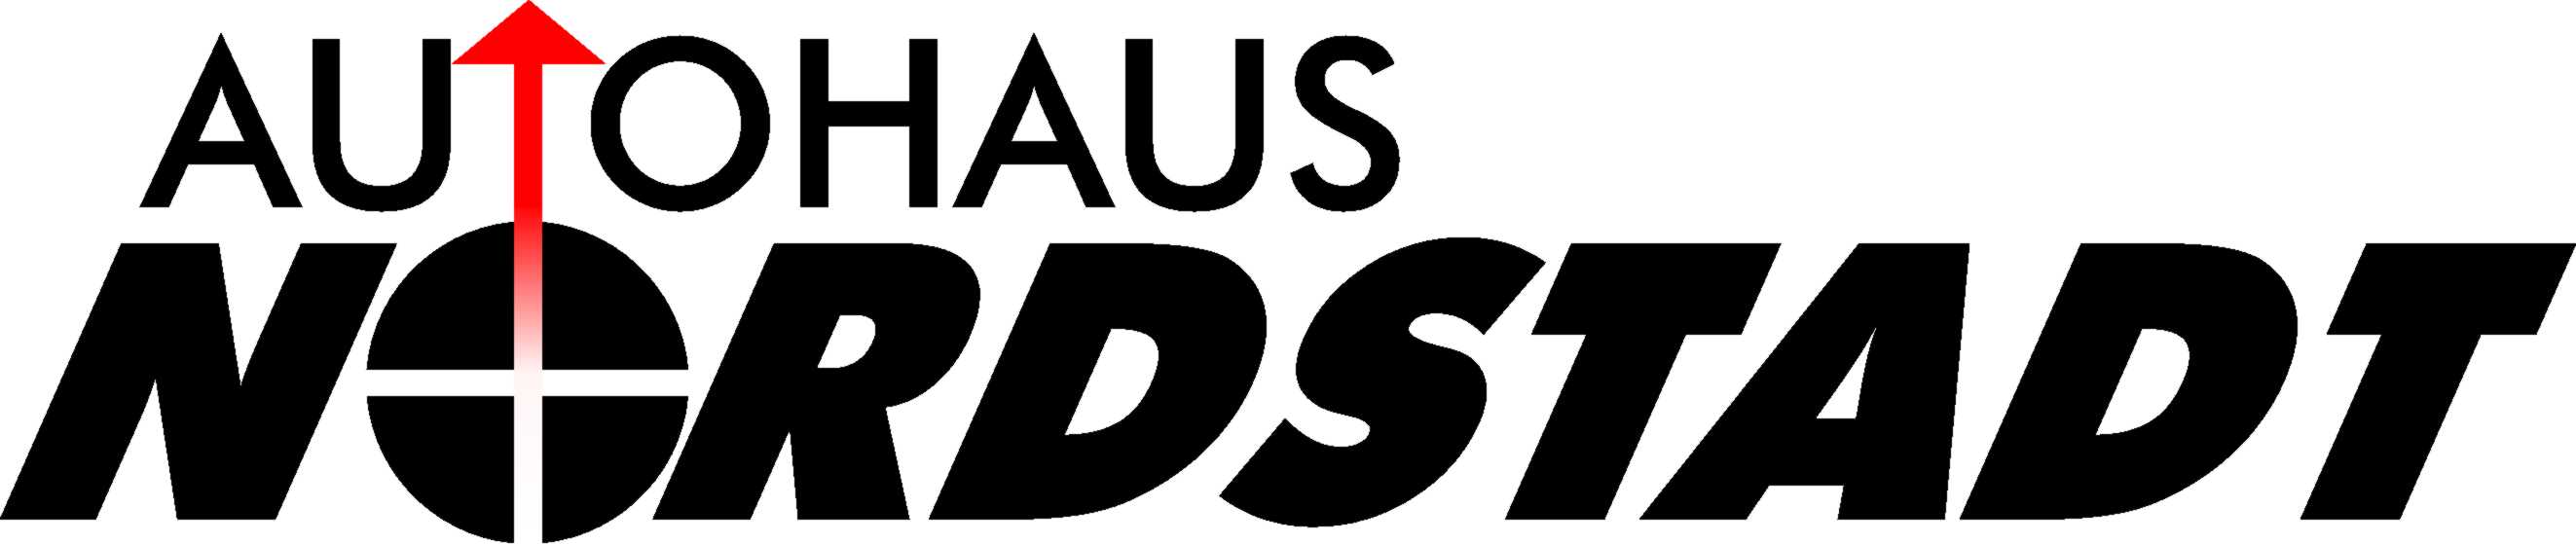 Foto - Autohaus Nordstadt GmbH